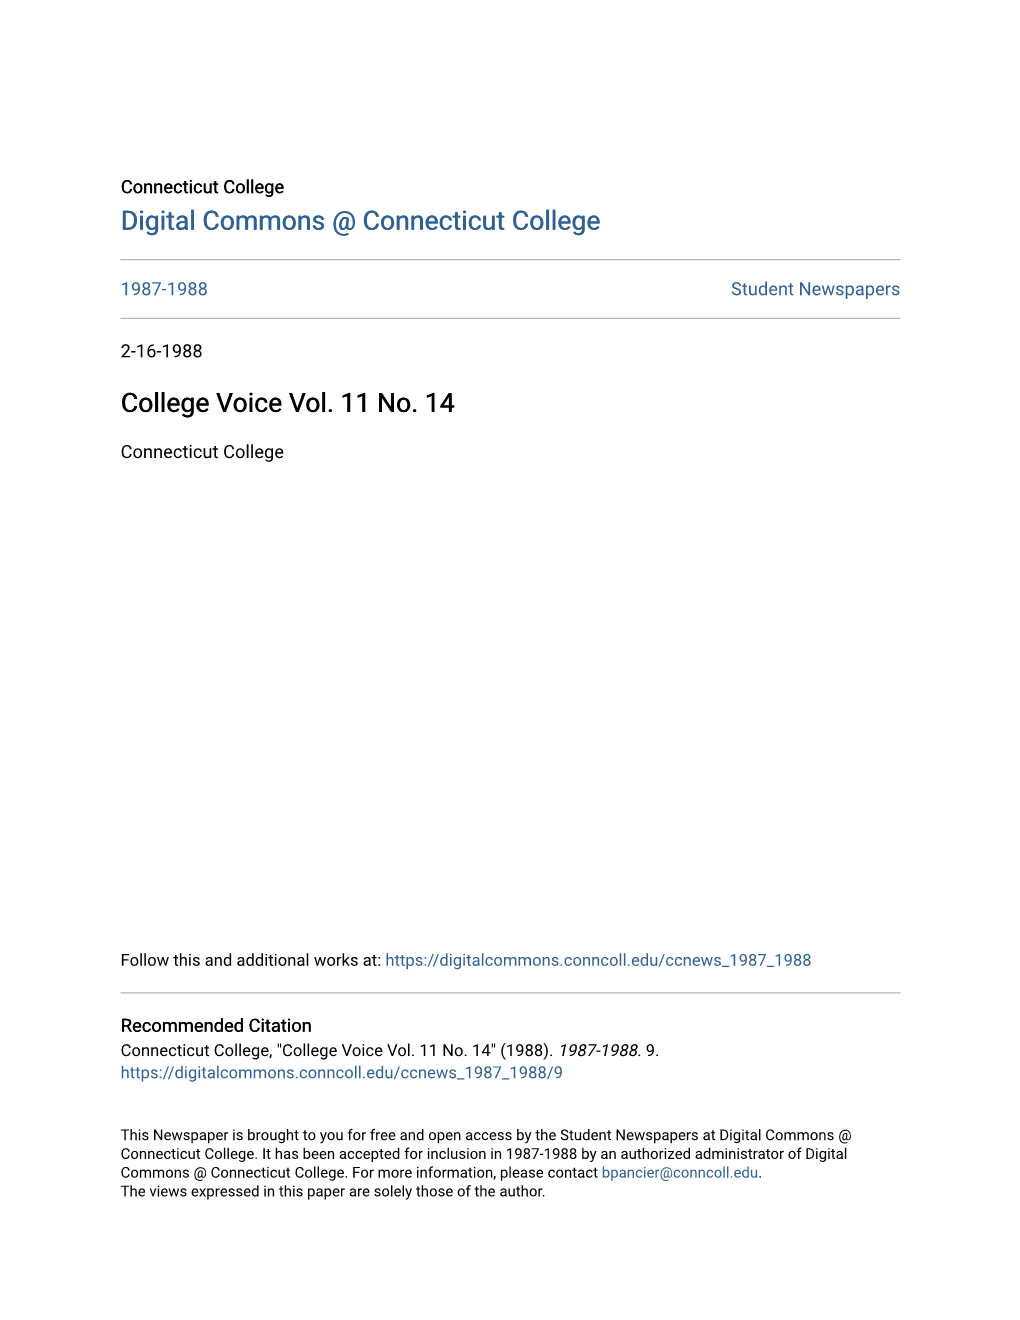 College Voice Vol. 11 No. 14